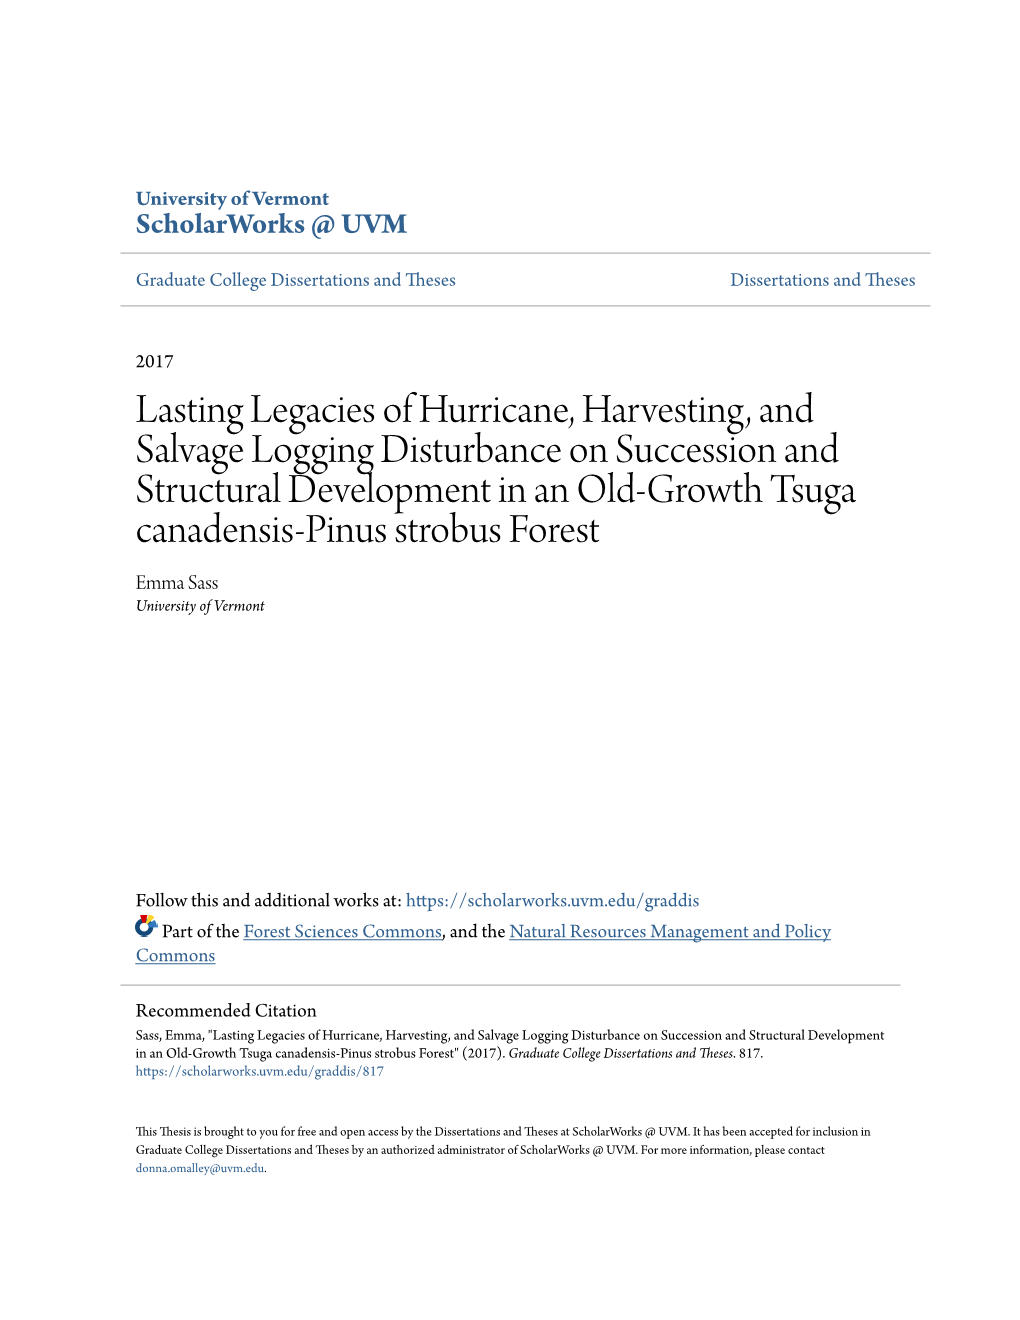 Lasting Legacies of Hurricane, Harvesting, and Salvage Logging